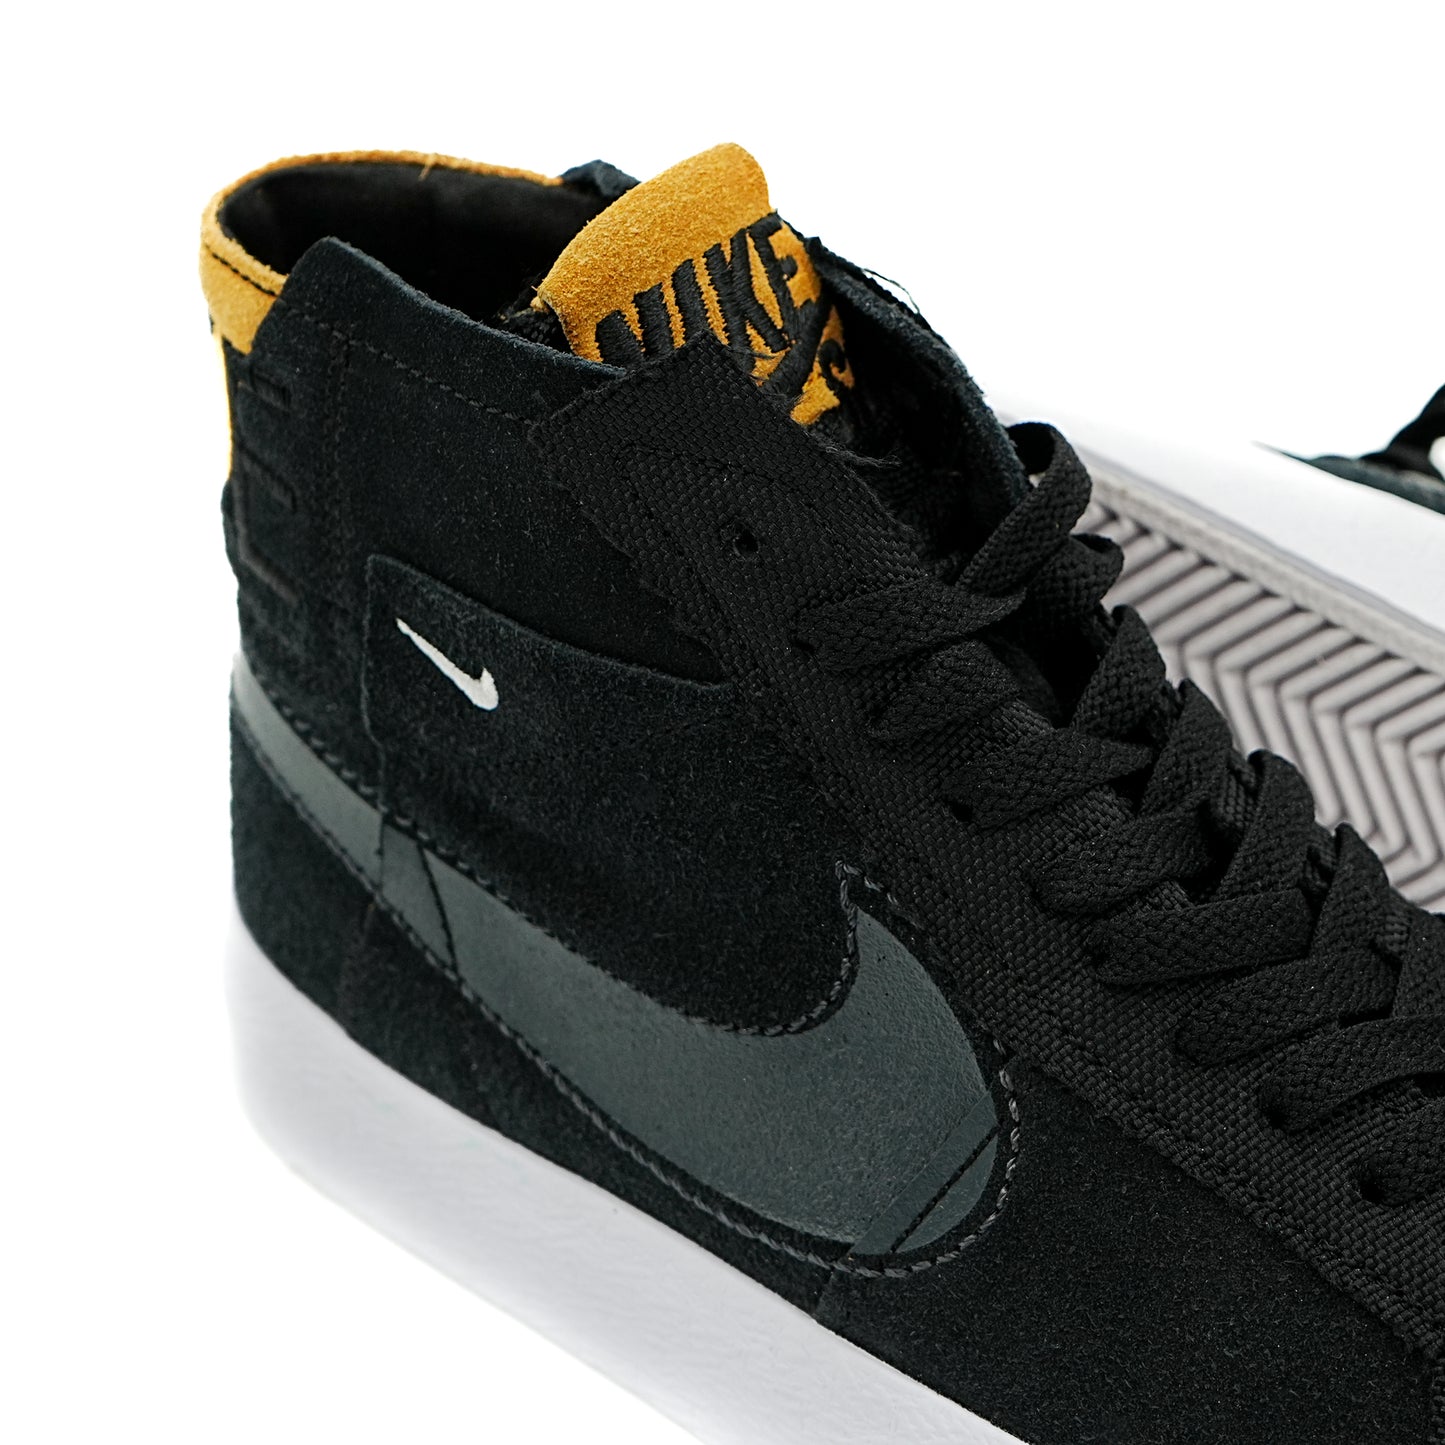 Nike SB Blazer Mid PRM - Black/Anthracite